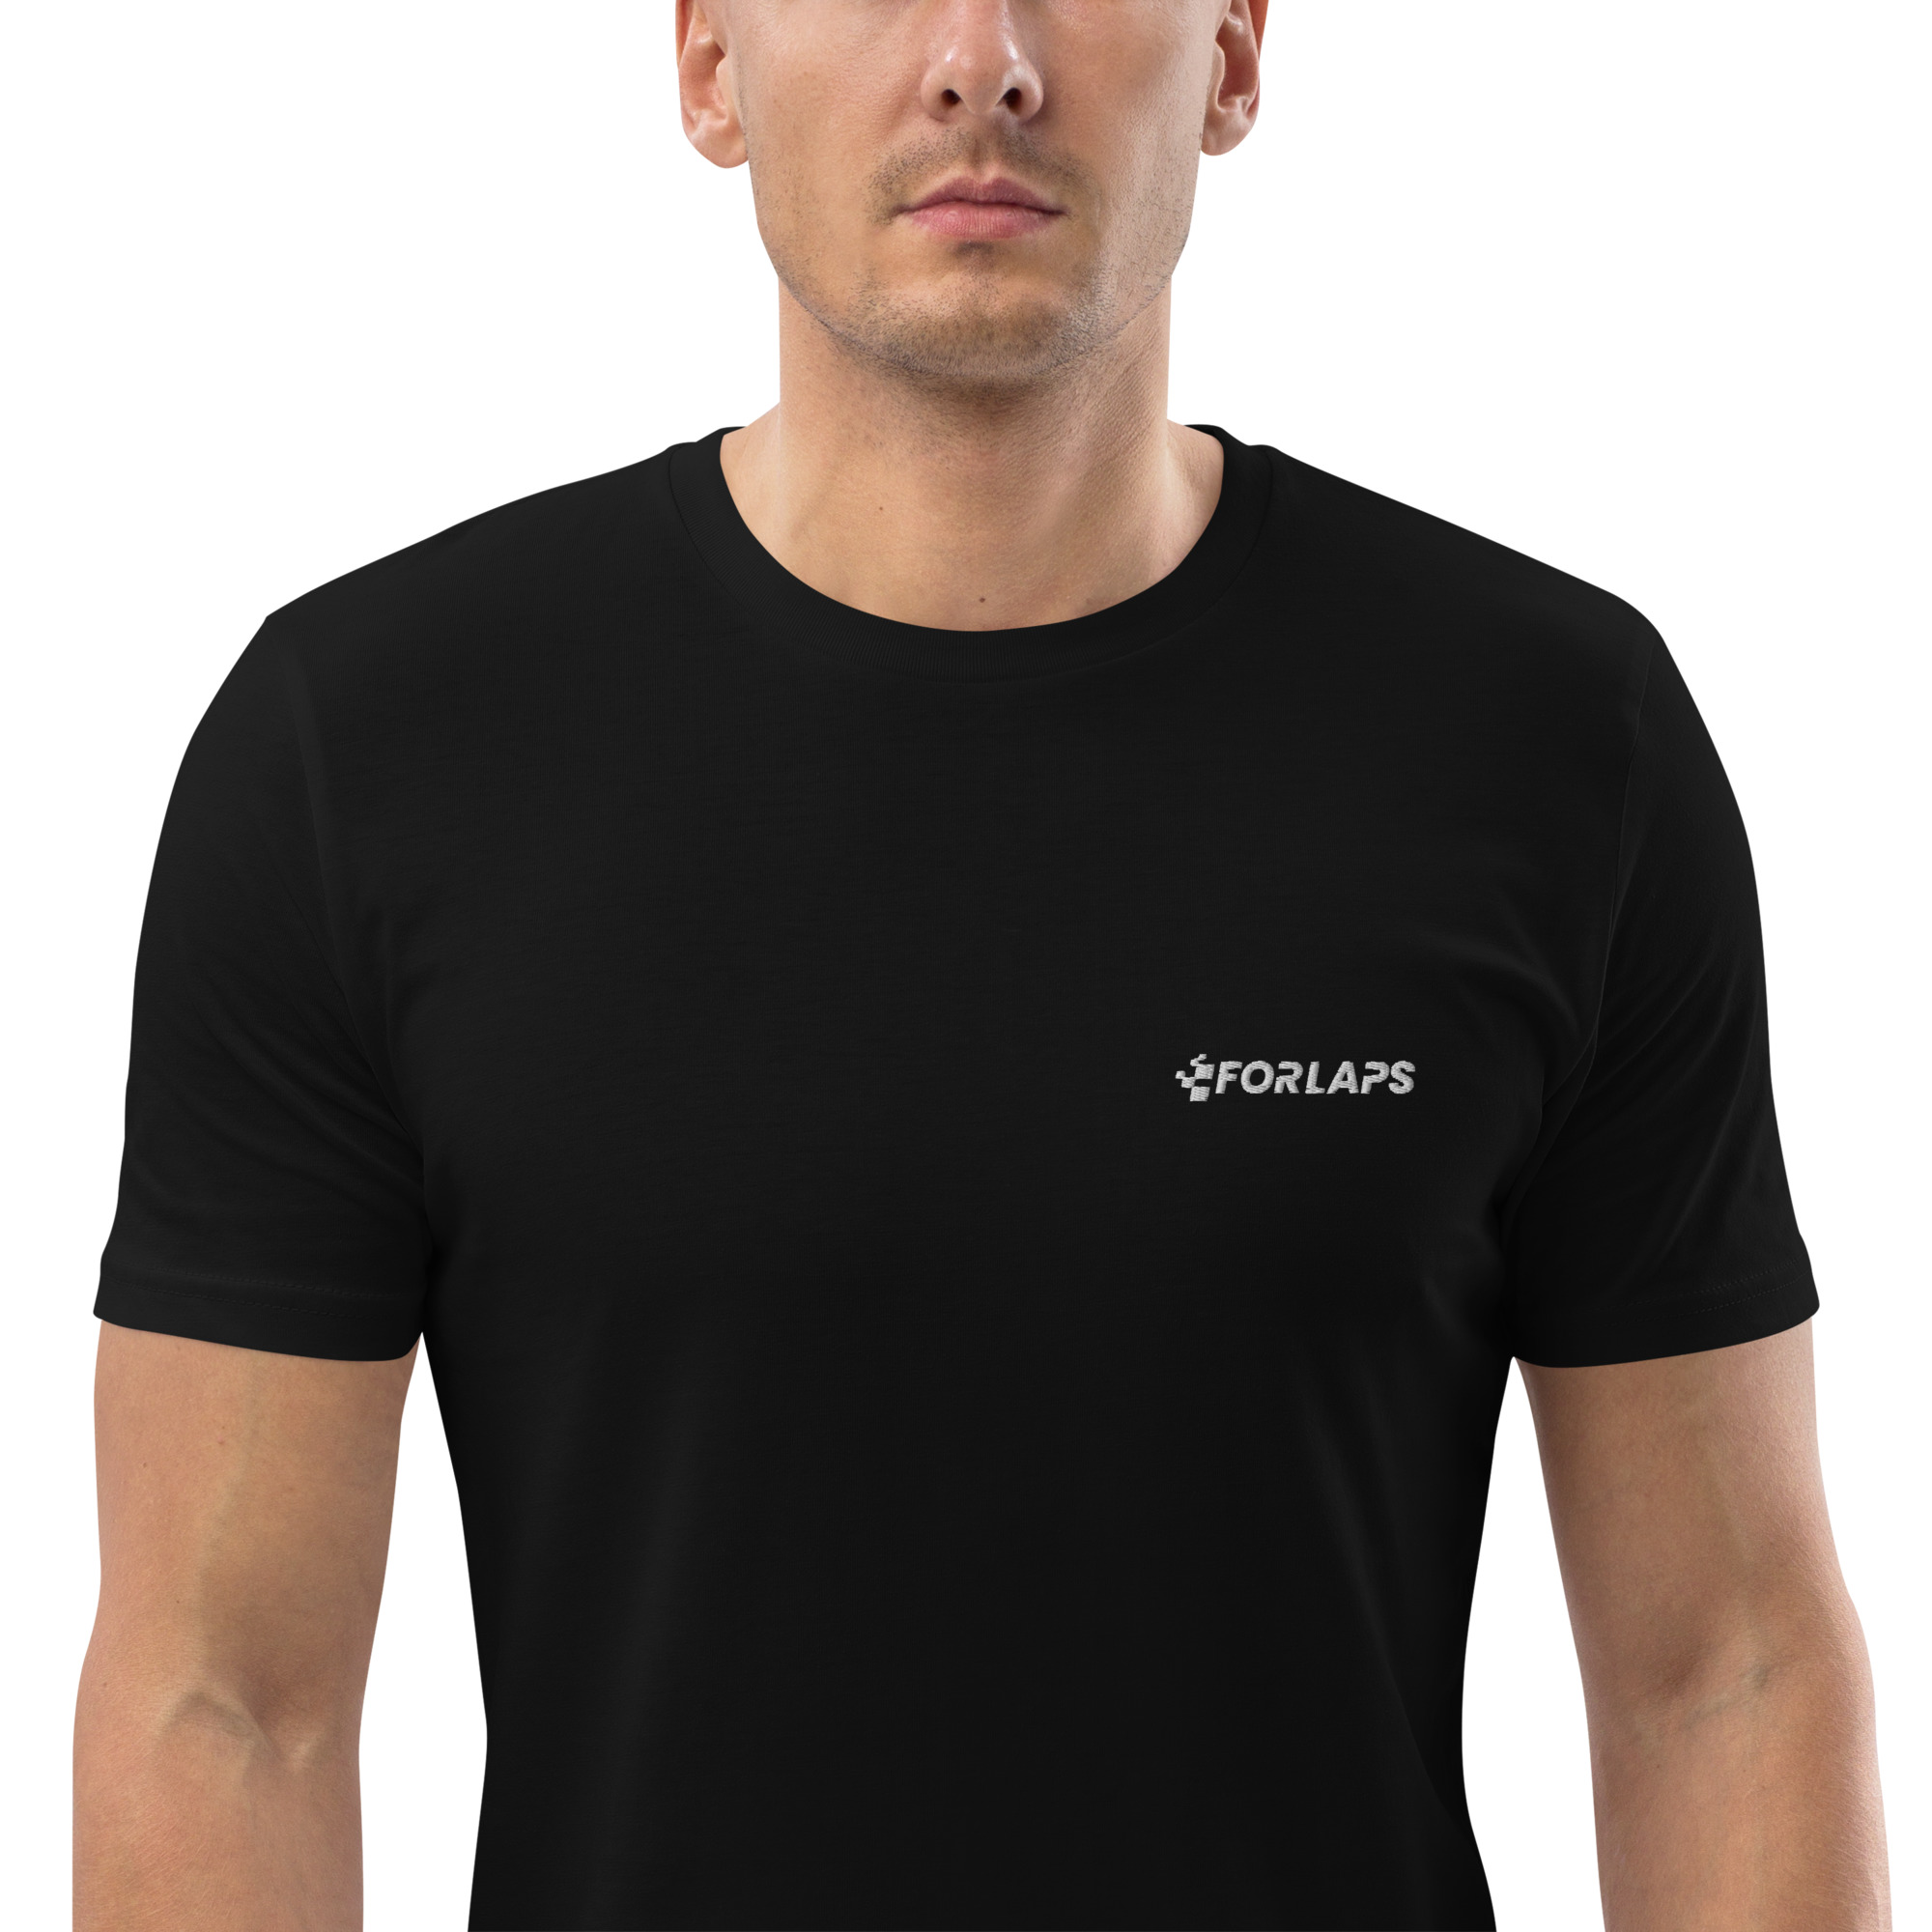 unisex-organic-cotton-t-shirt-black-zoomed-in-62c8251cd9ce1.jpg